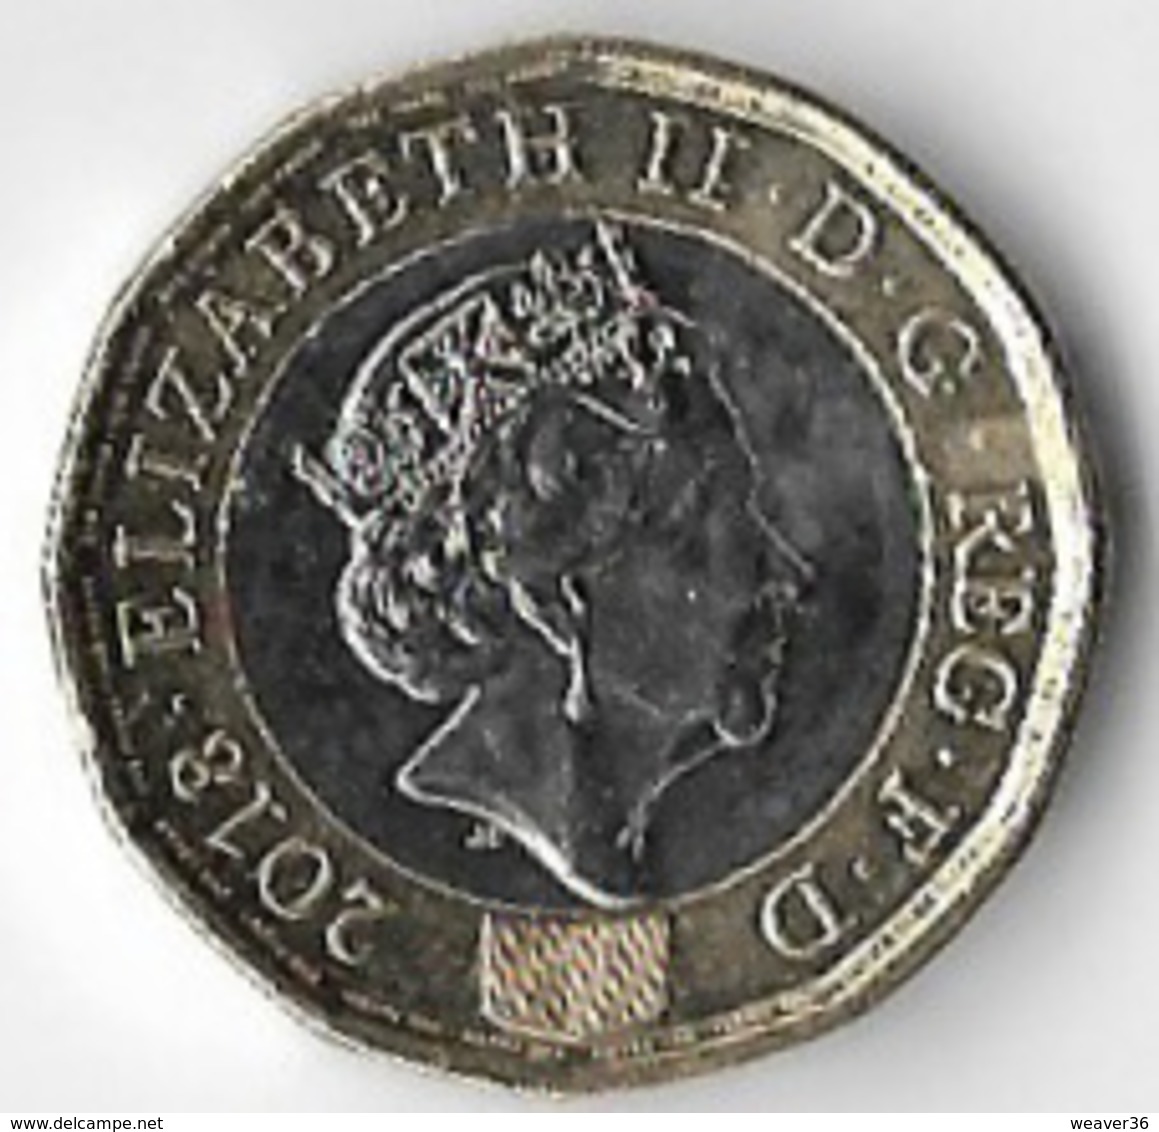 United Kingdom 2018 £1 (A) [C123/1D] - 1 Pound